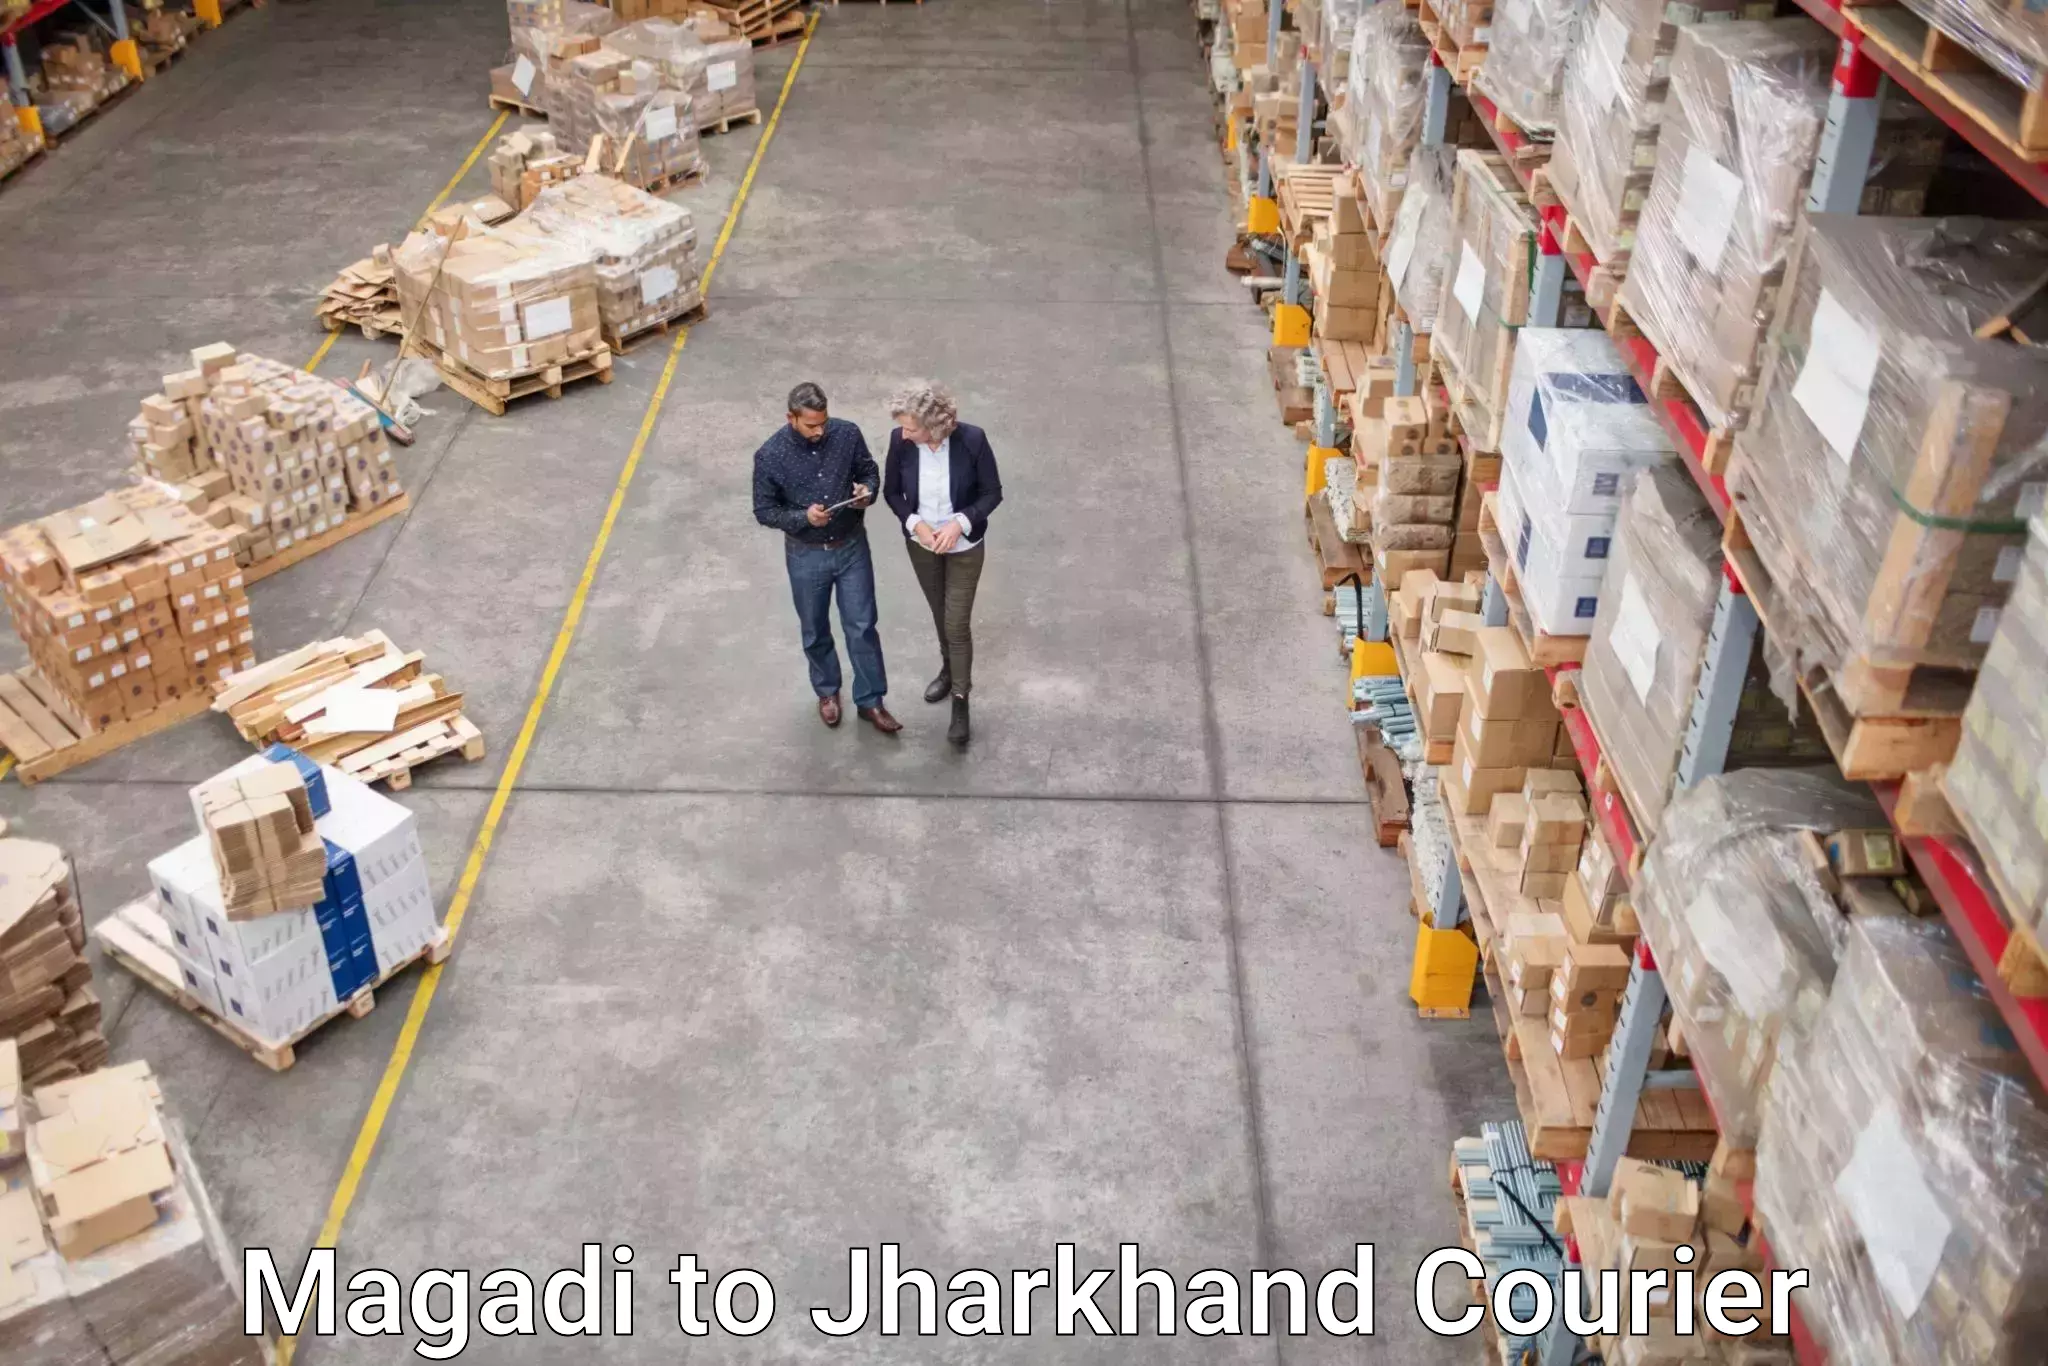 Cargo delivery service Magadi to Rangalia